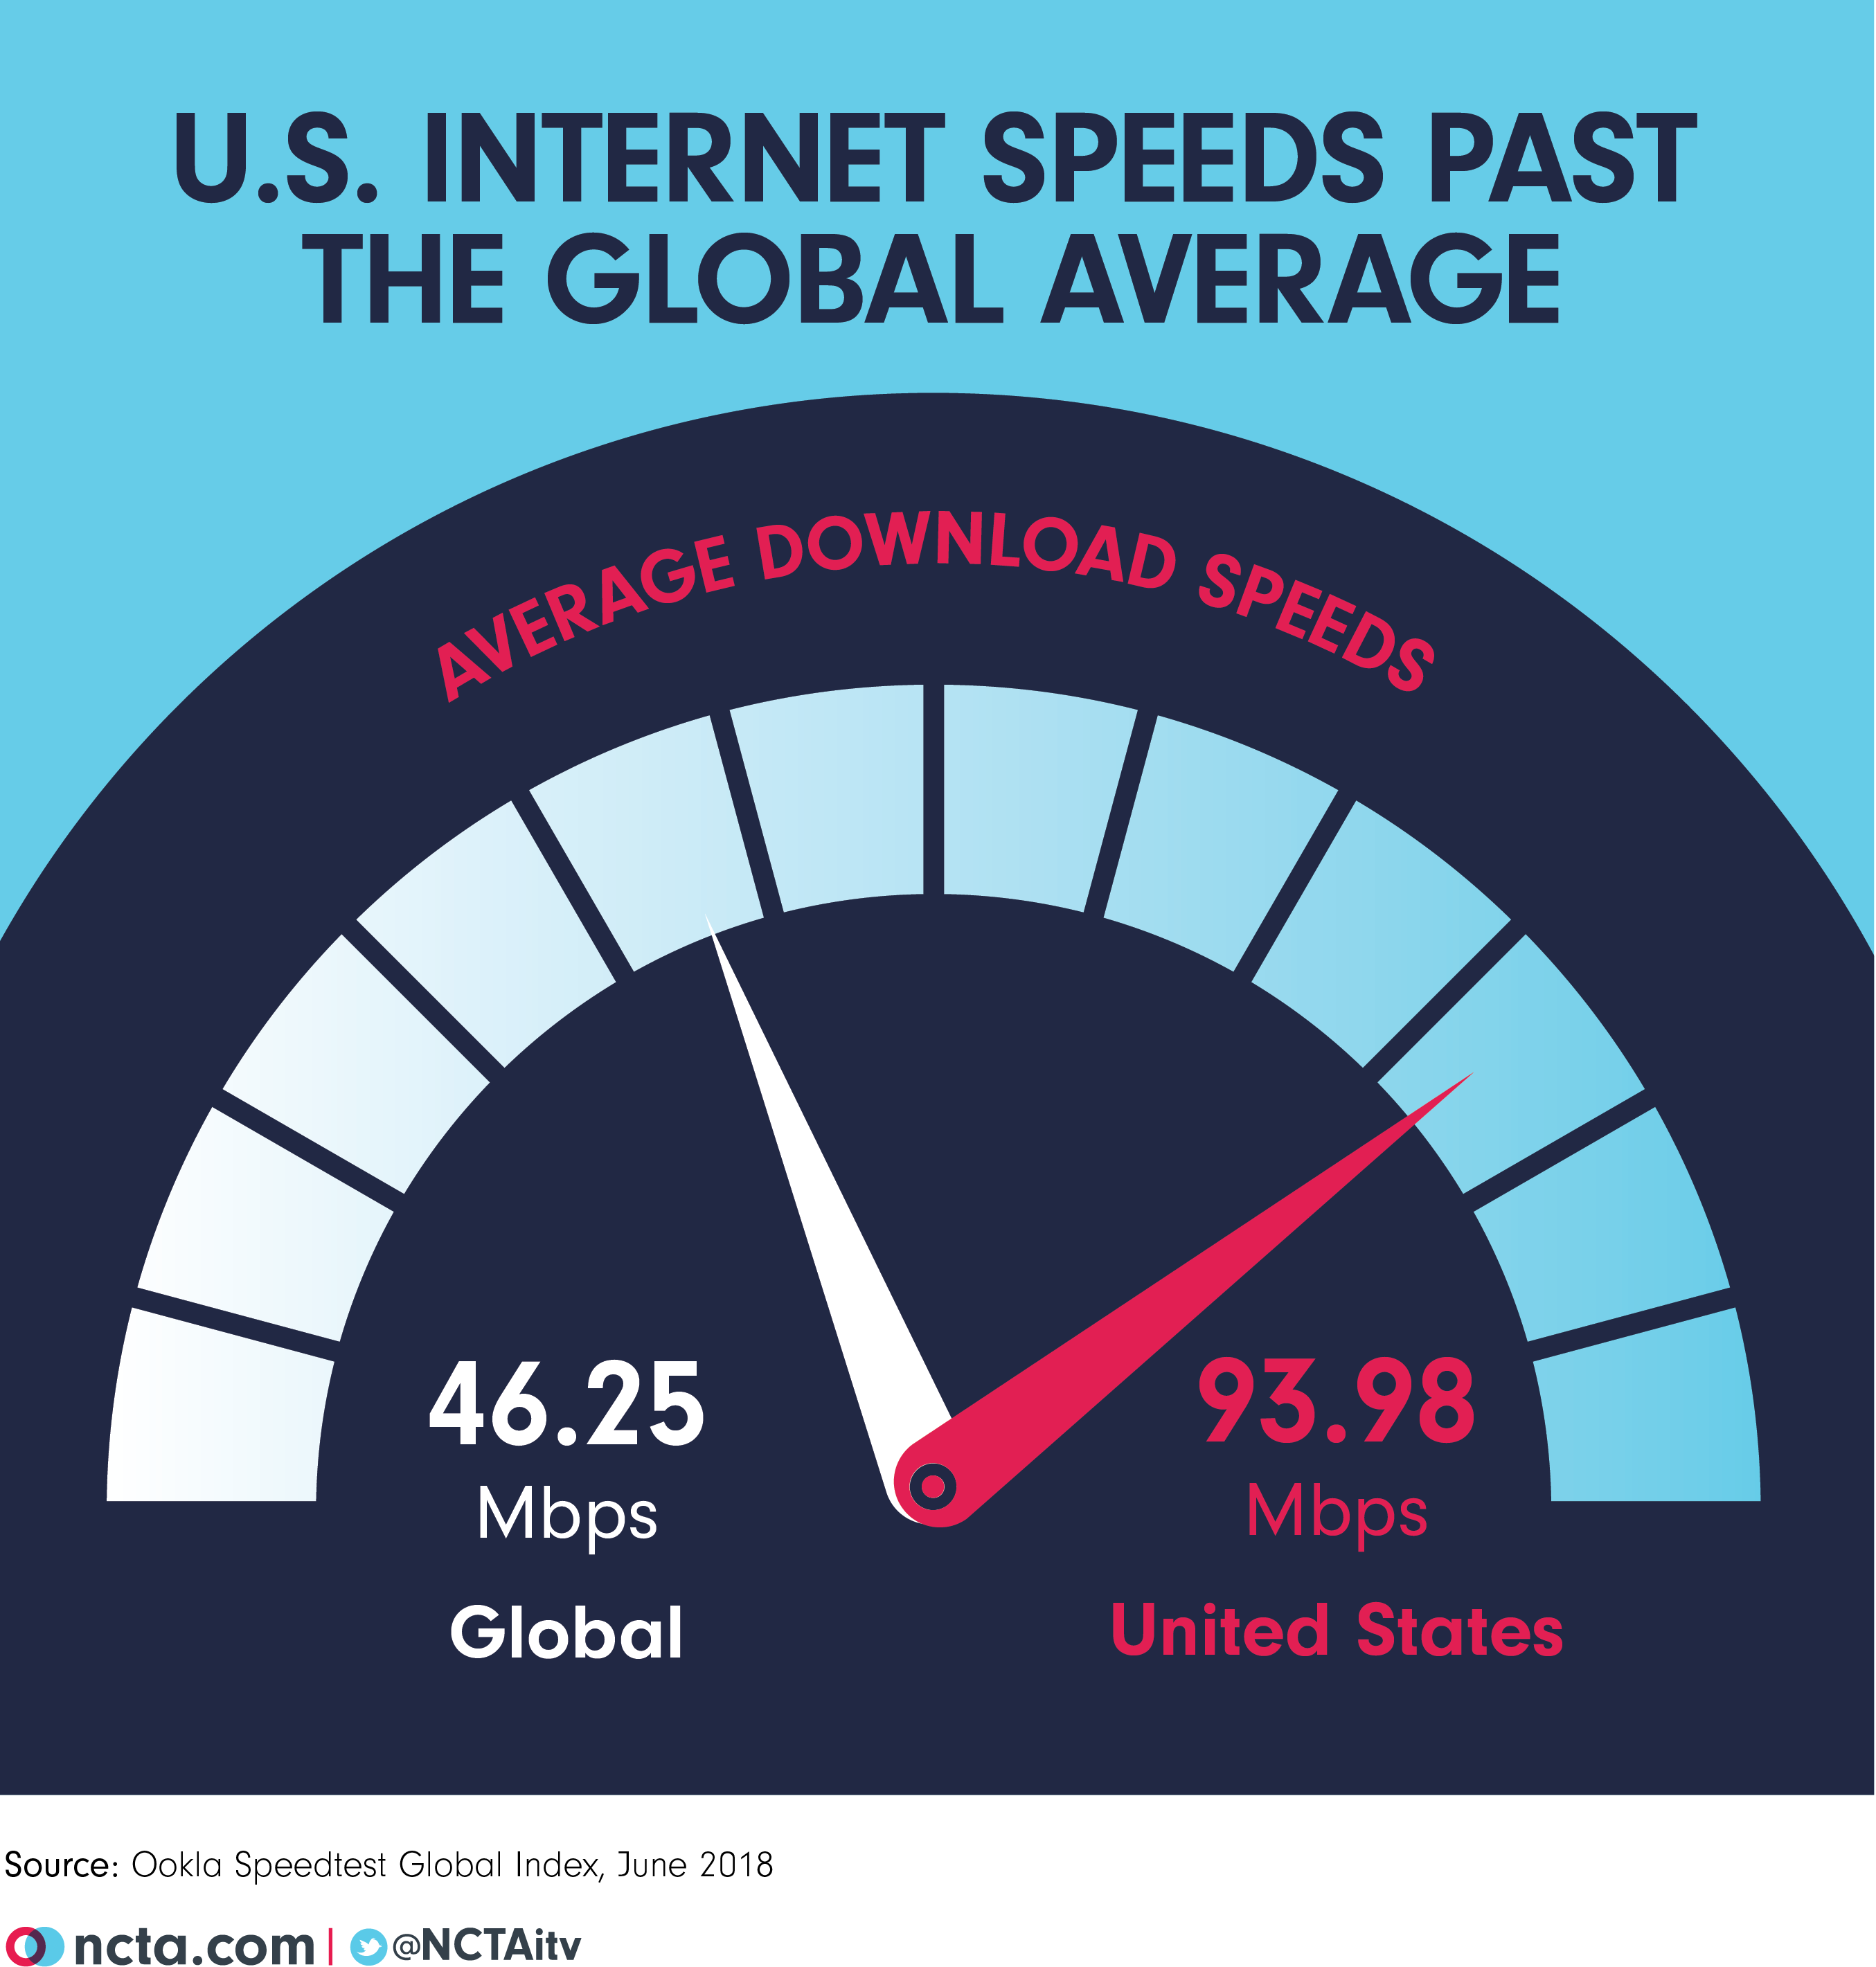 Average U.S. Internet Speeds More Than Double Global Average